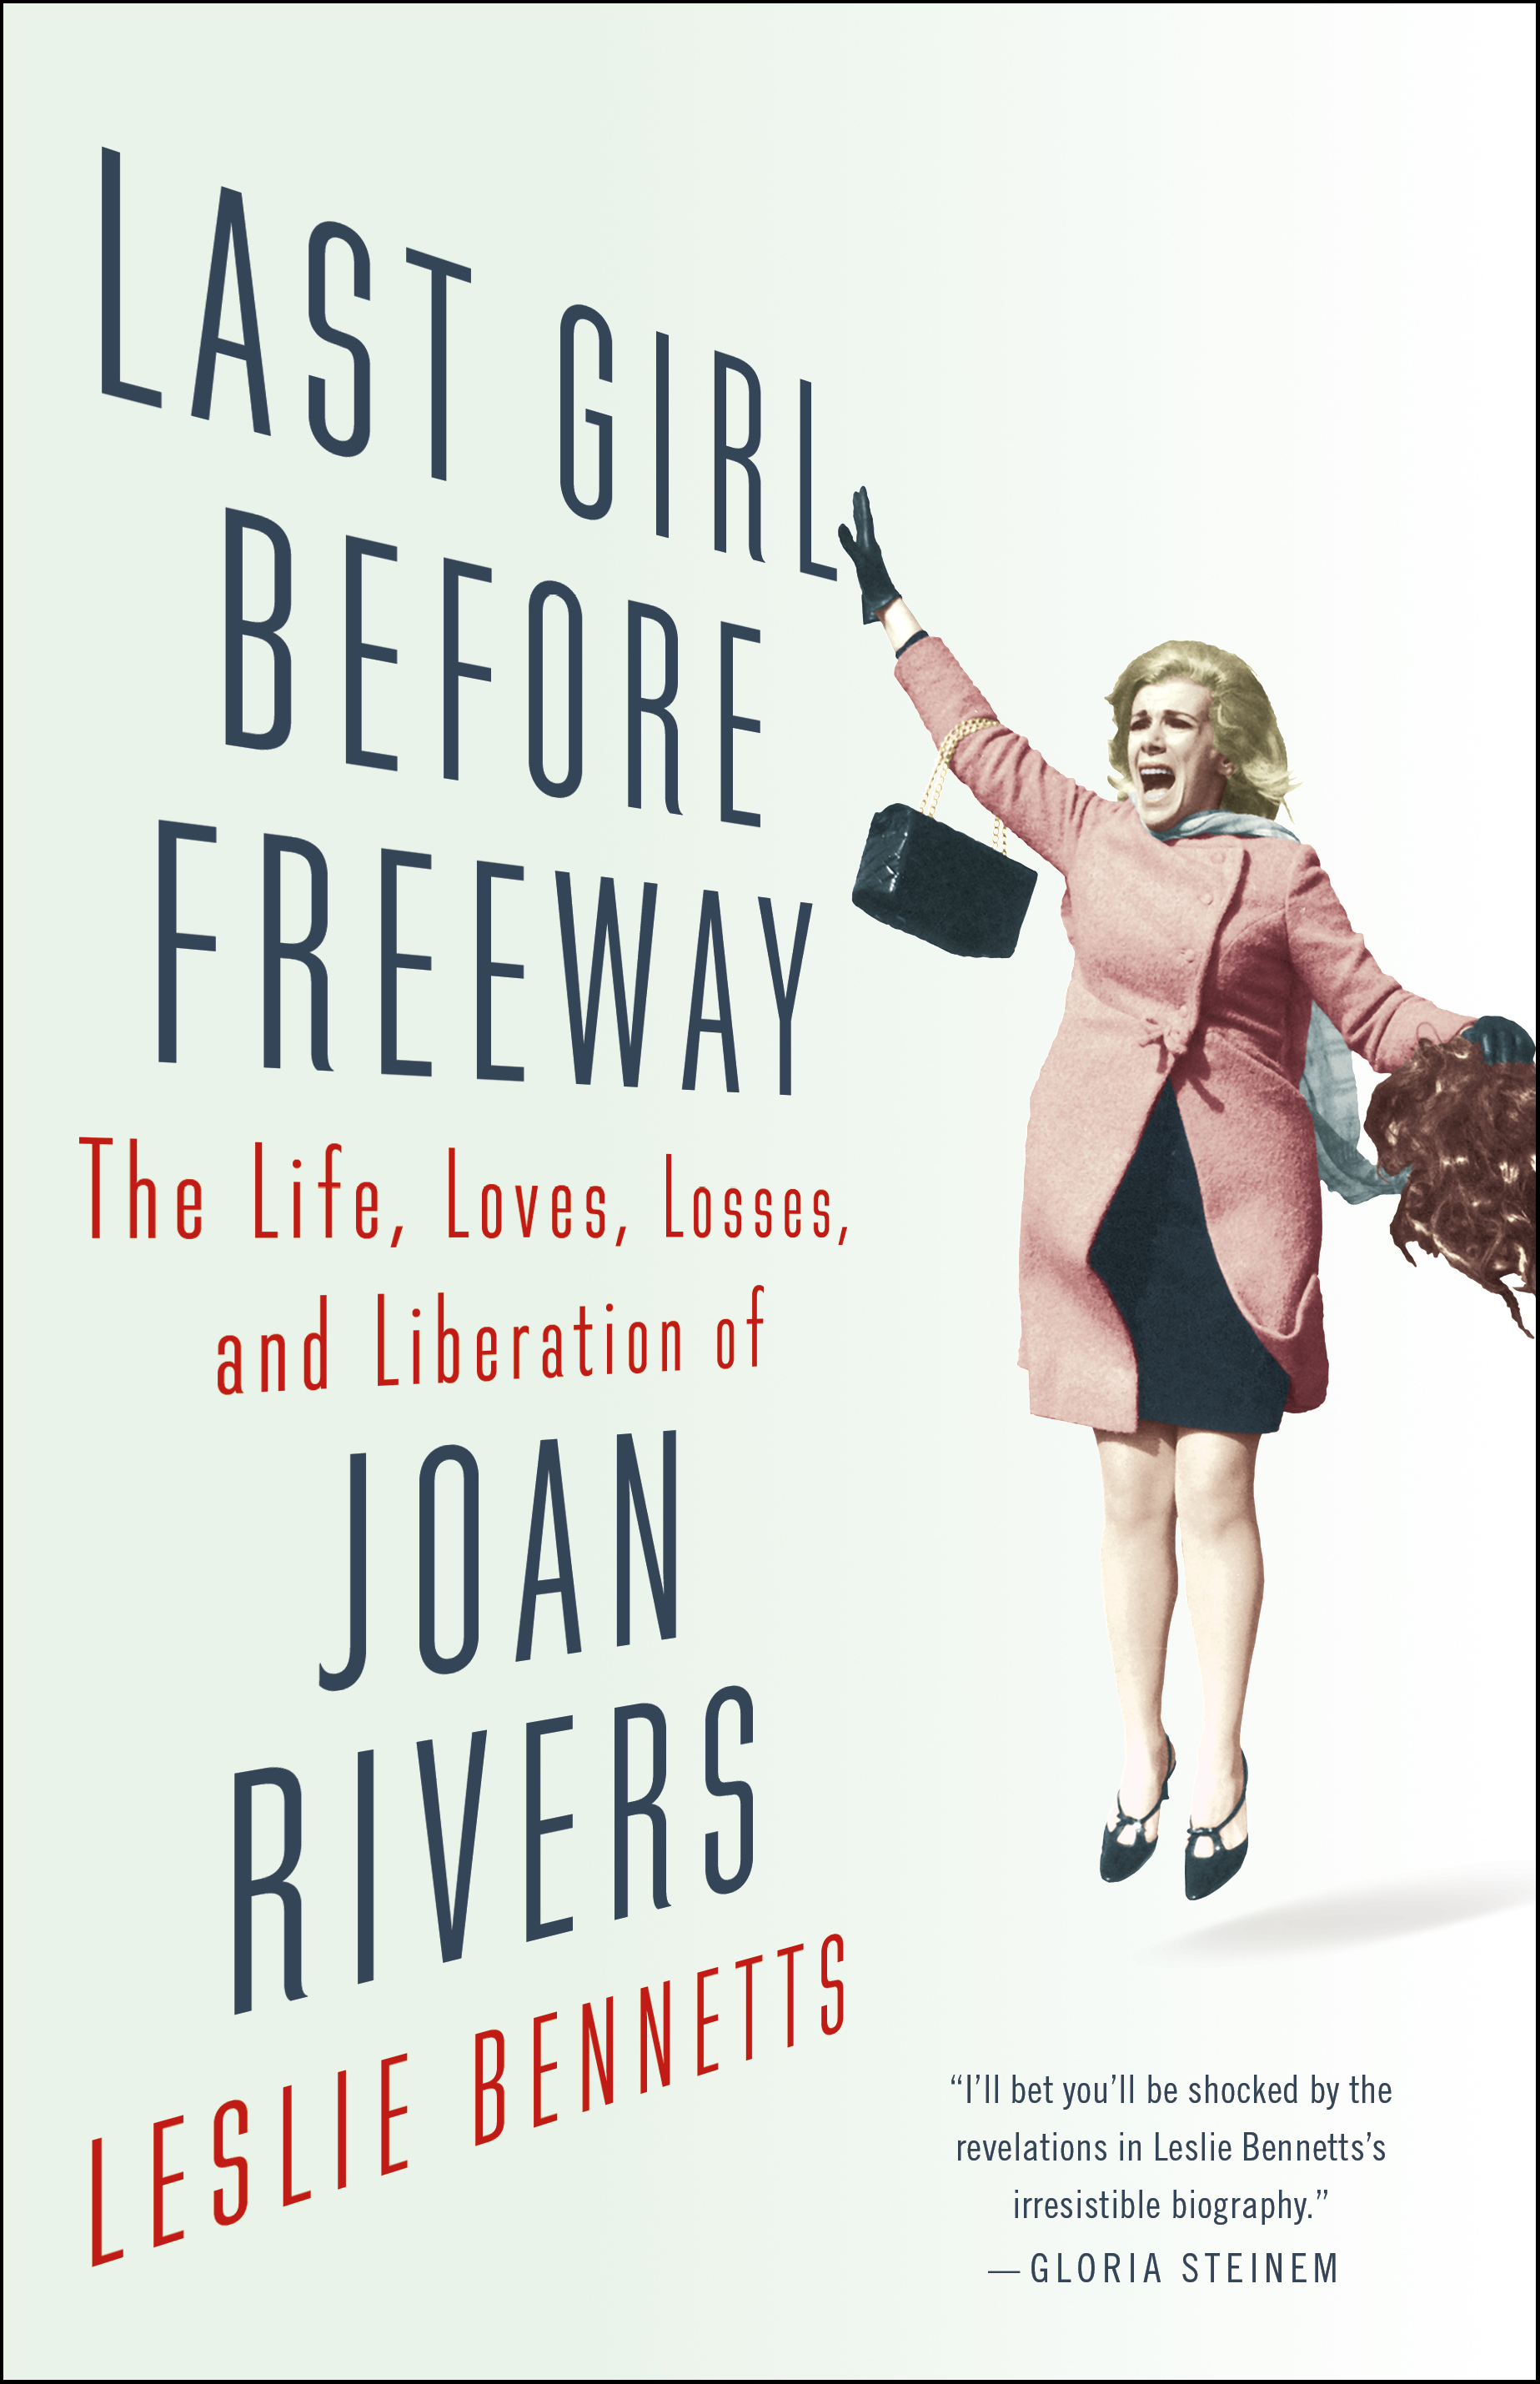 Leslie Bennetts's New Biography on Joan Rivers will be Released on November 15, 2016